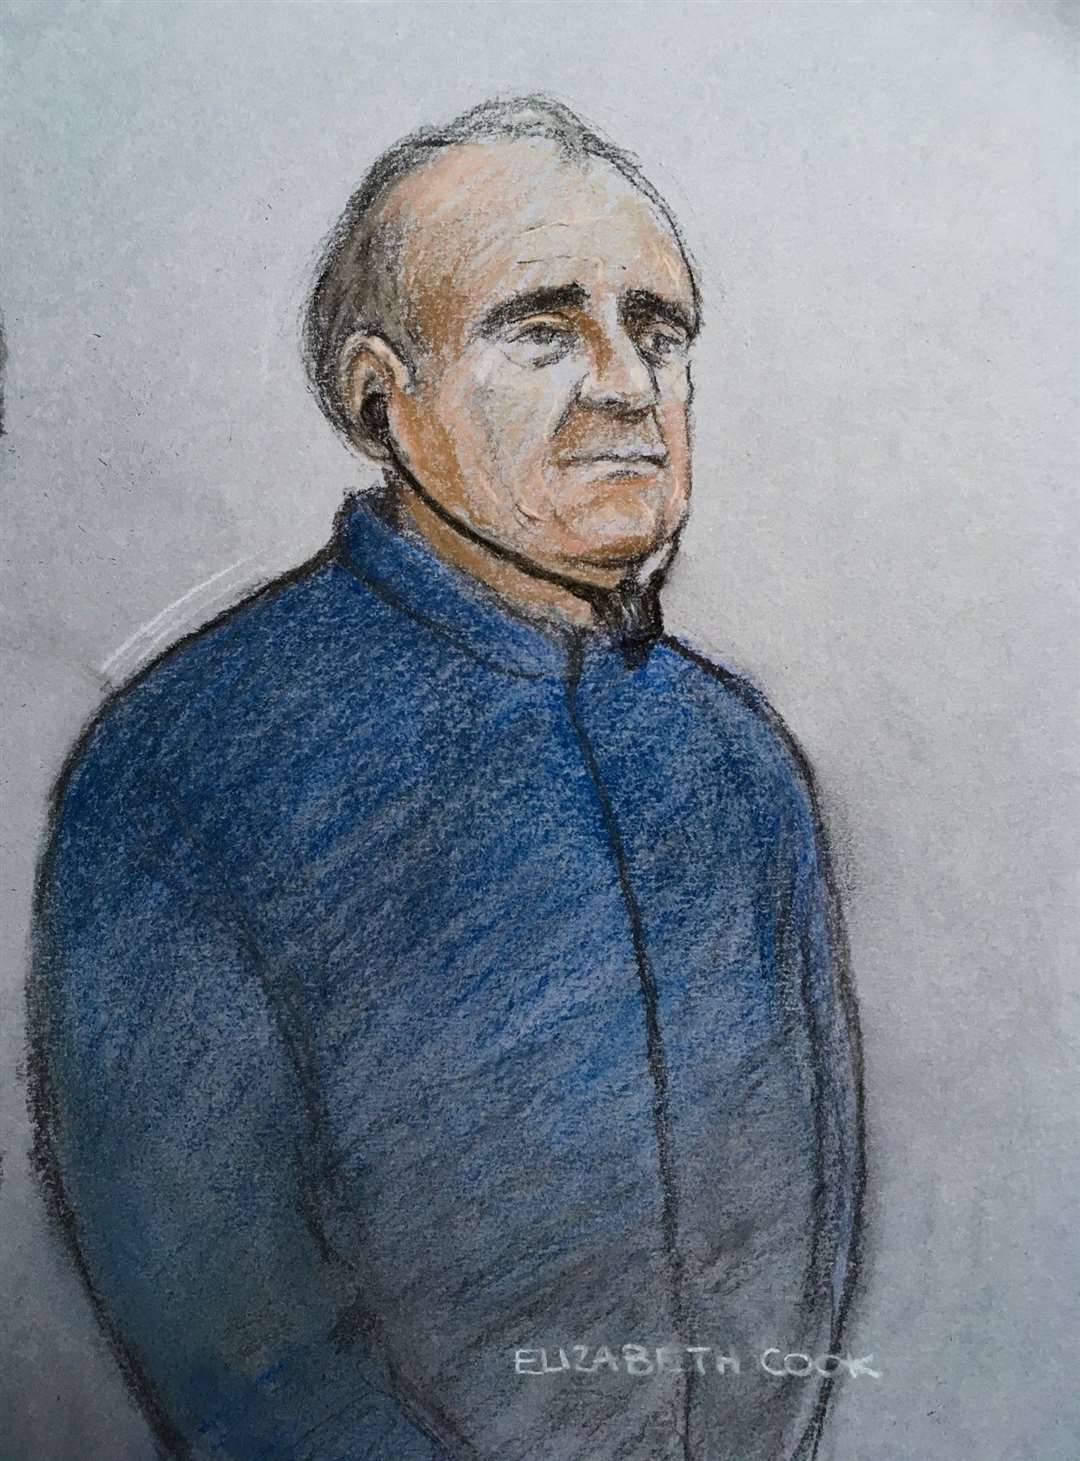 Court artist sketch of David Smith (Elizabeth Cook/PA)